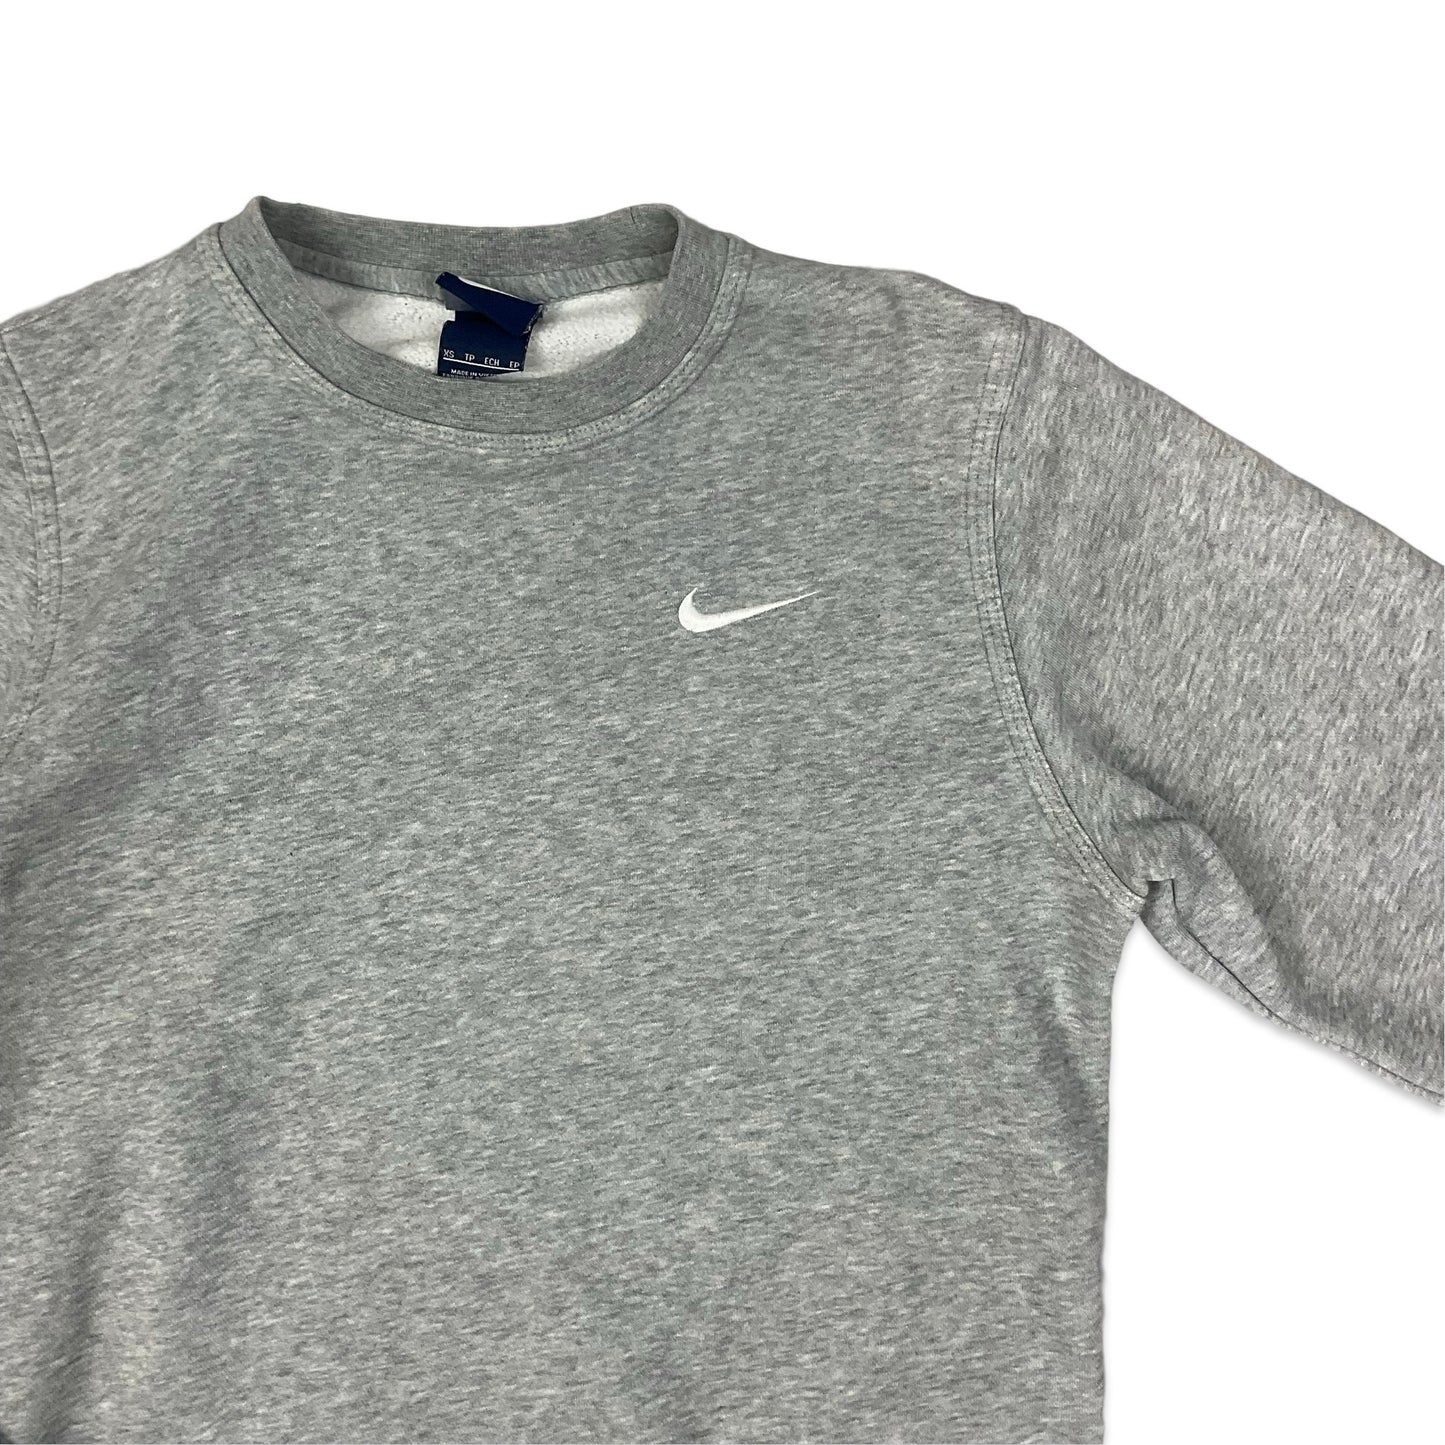 Nike Grey Crew Neck Sweatshirt XS S